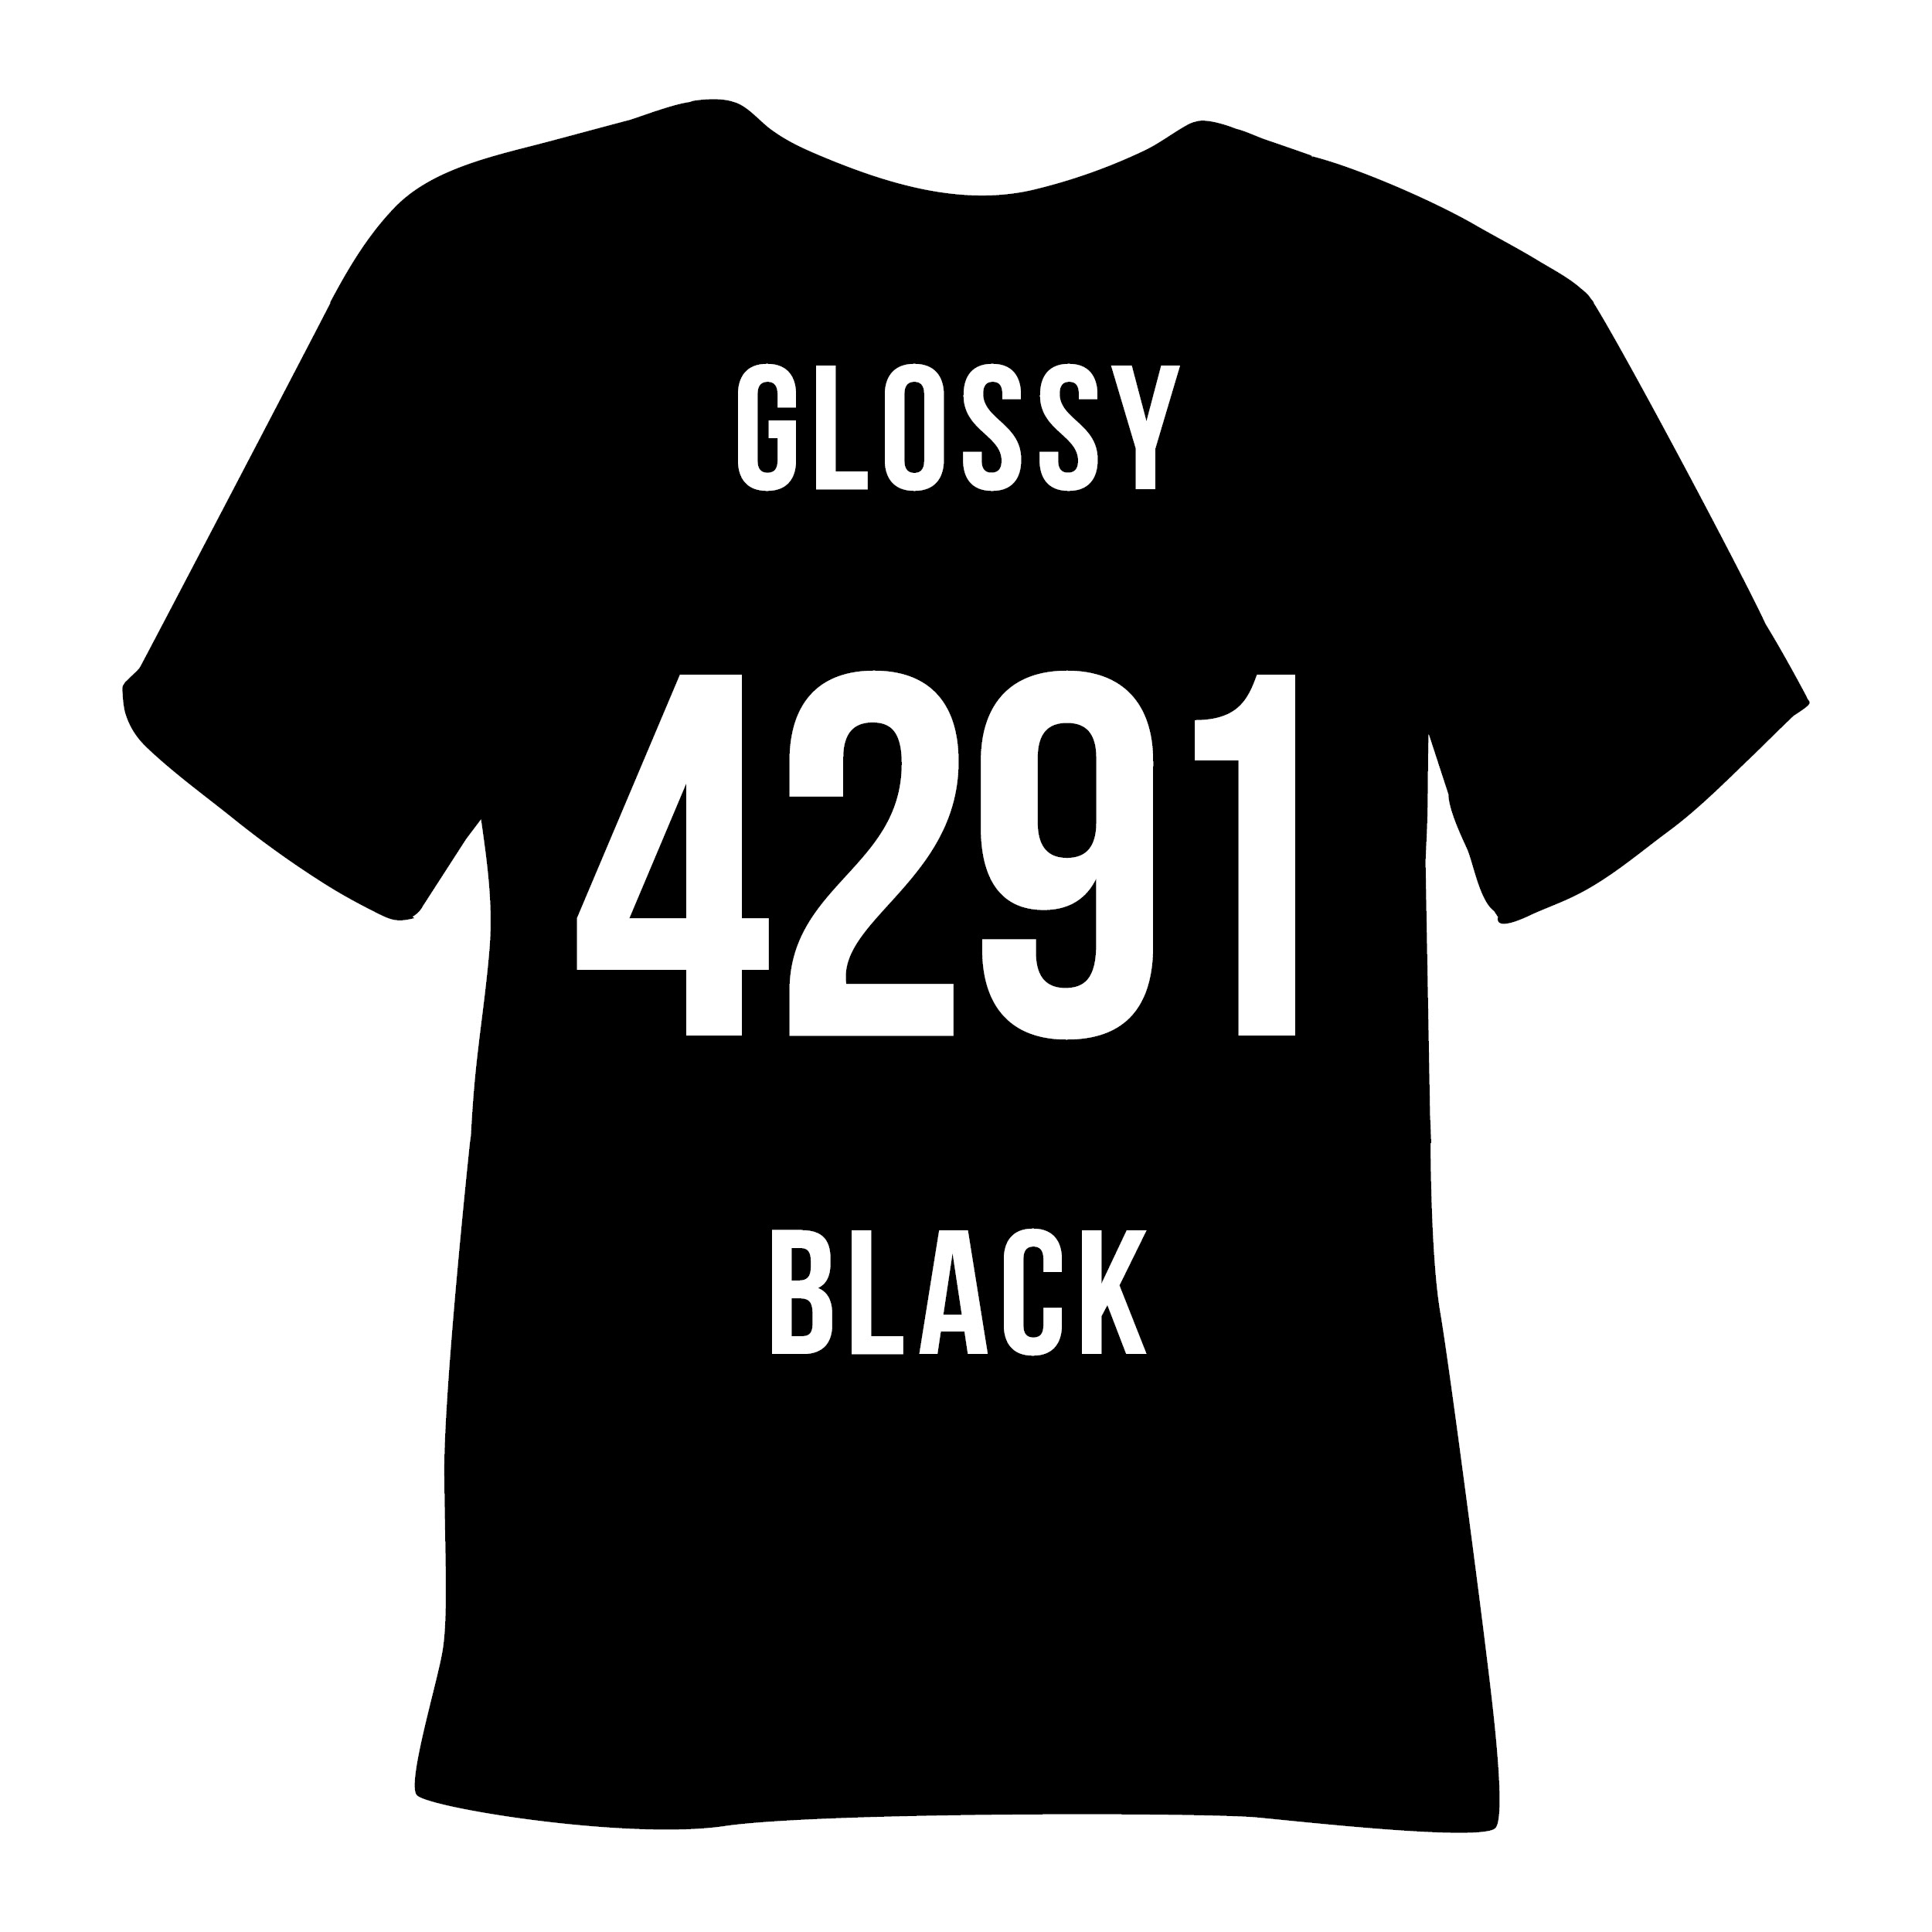 4291 GLOSSY BLACK